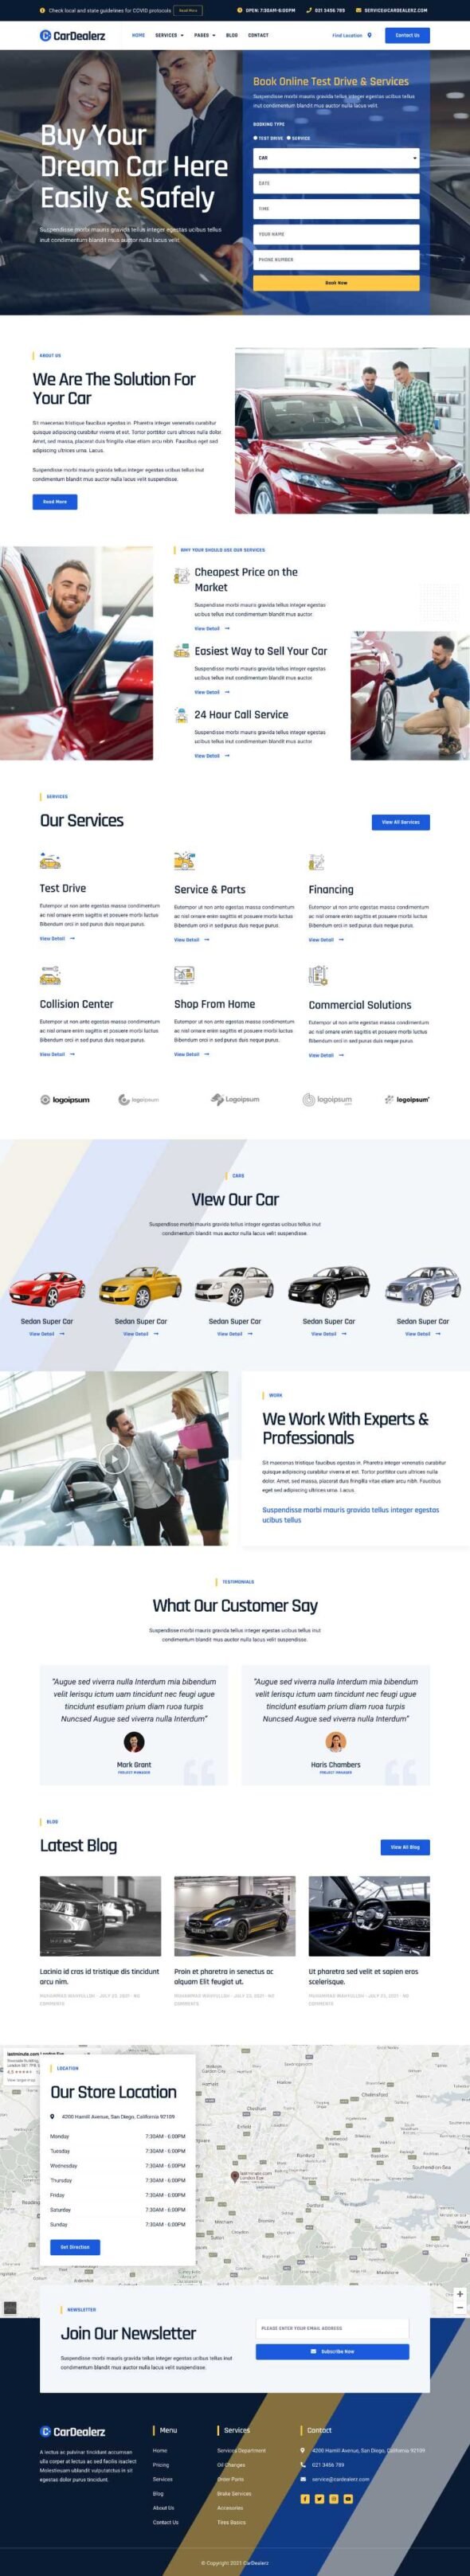 CarDealerz - Auto Dealer & Auto Shop Website Elementor Template Kit